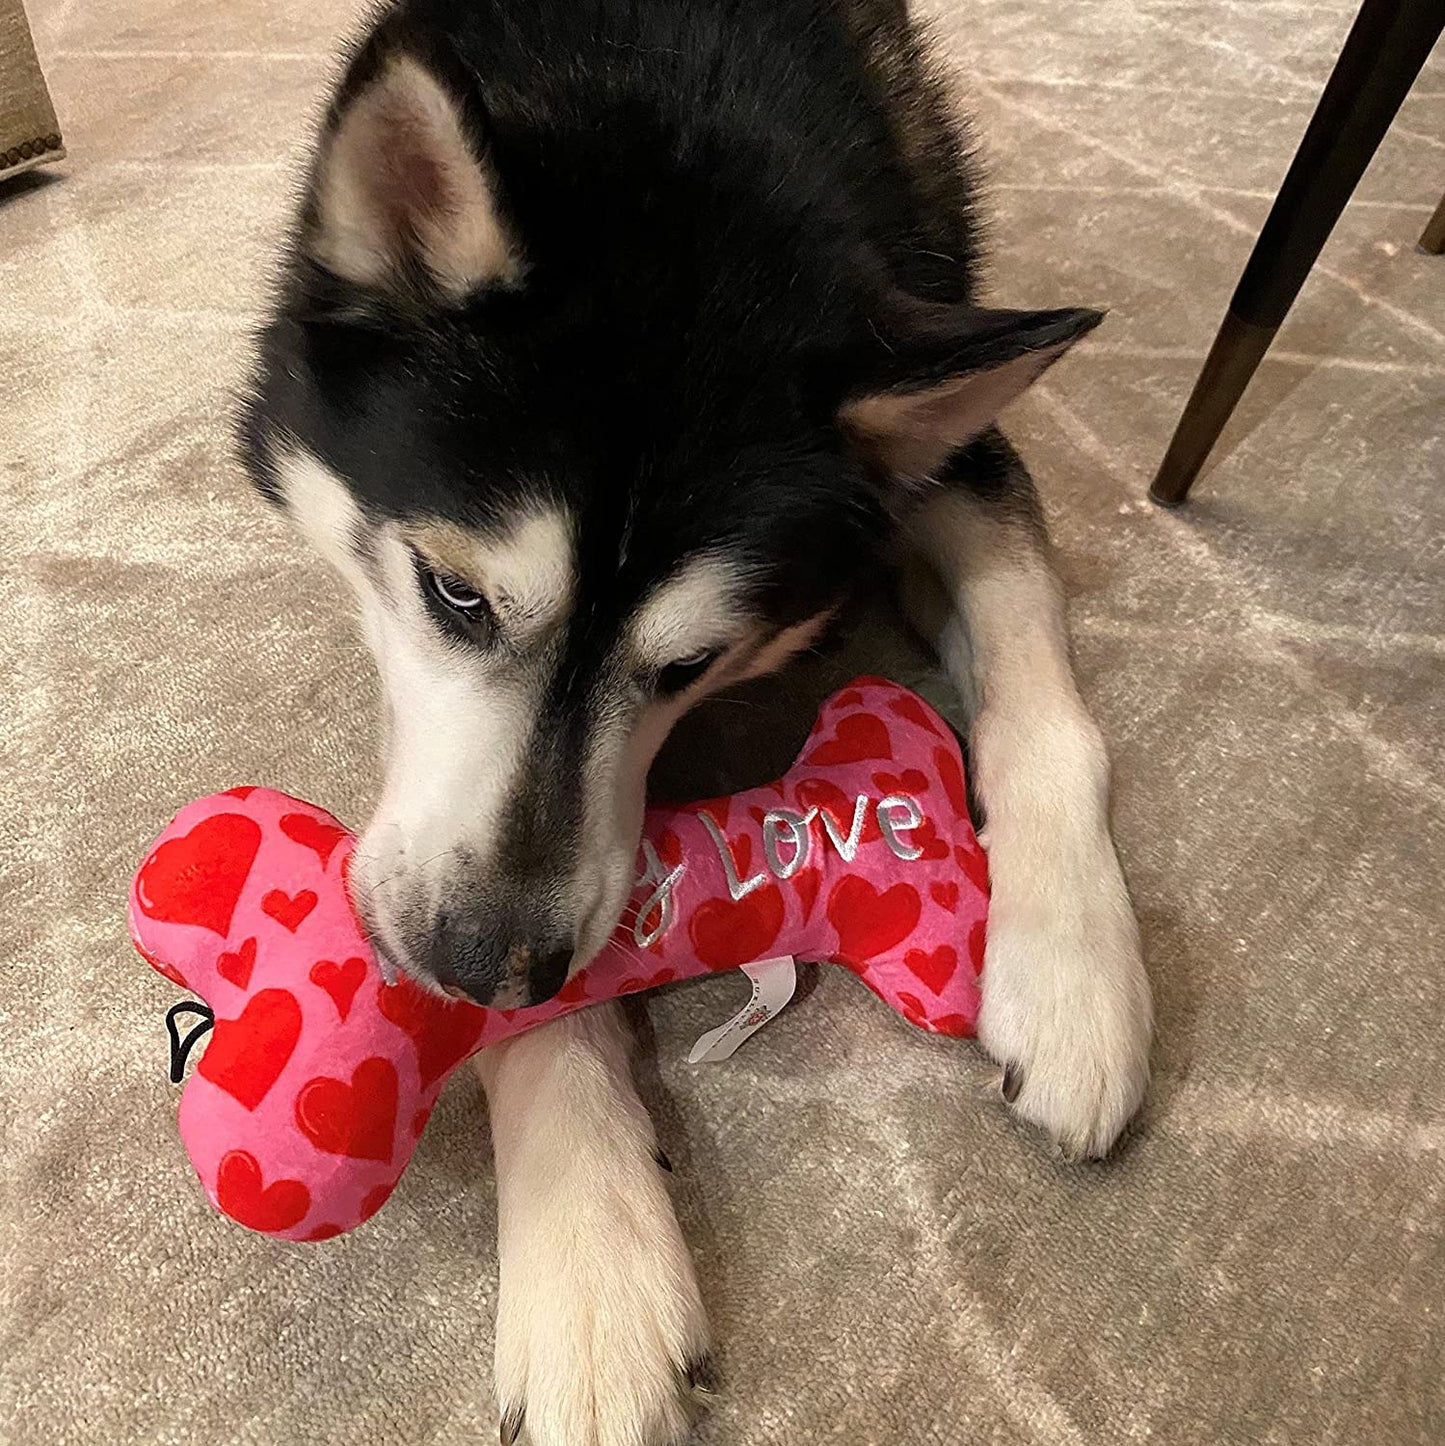 Lulubelles My Puppy Love Valentine's Dog Bone